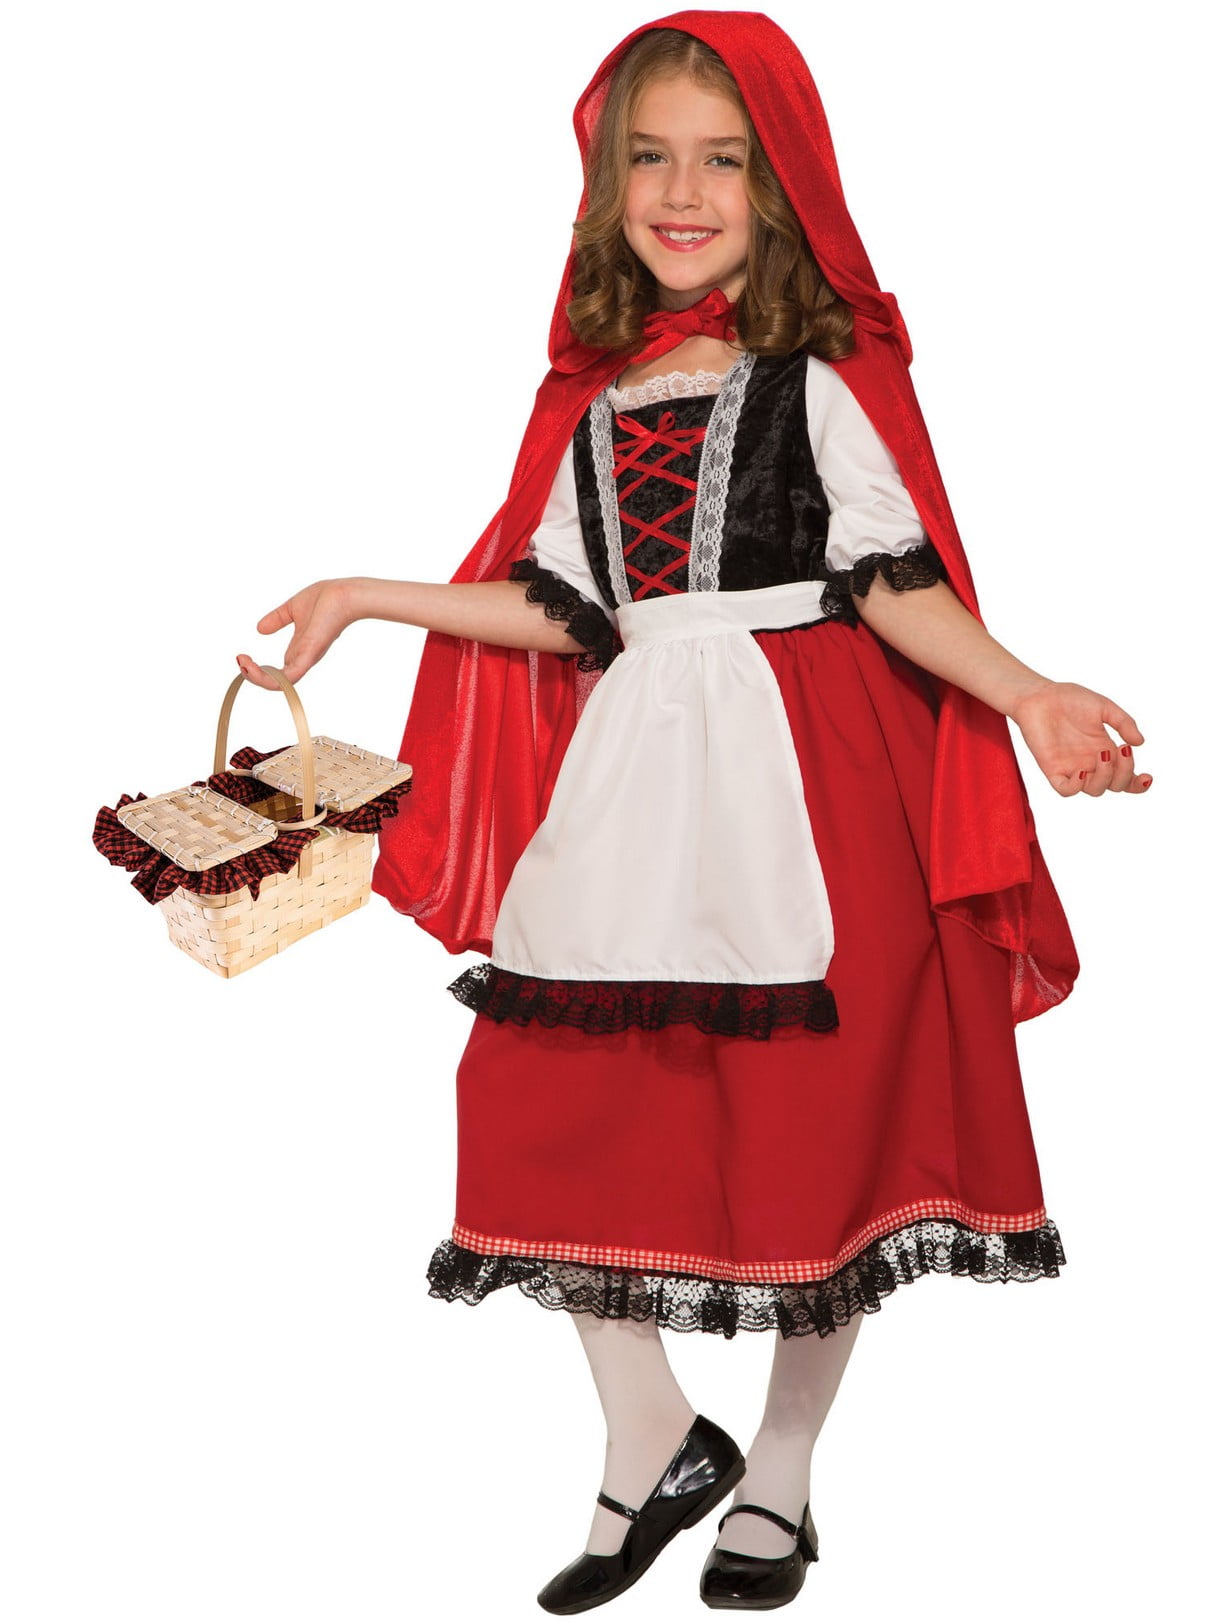 Picture of Forum Novelties 277625 Halloween Girls Deluxe Red Riding Hood Costume - Medium